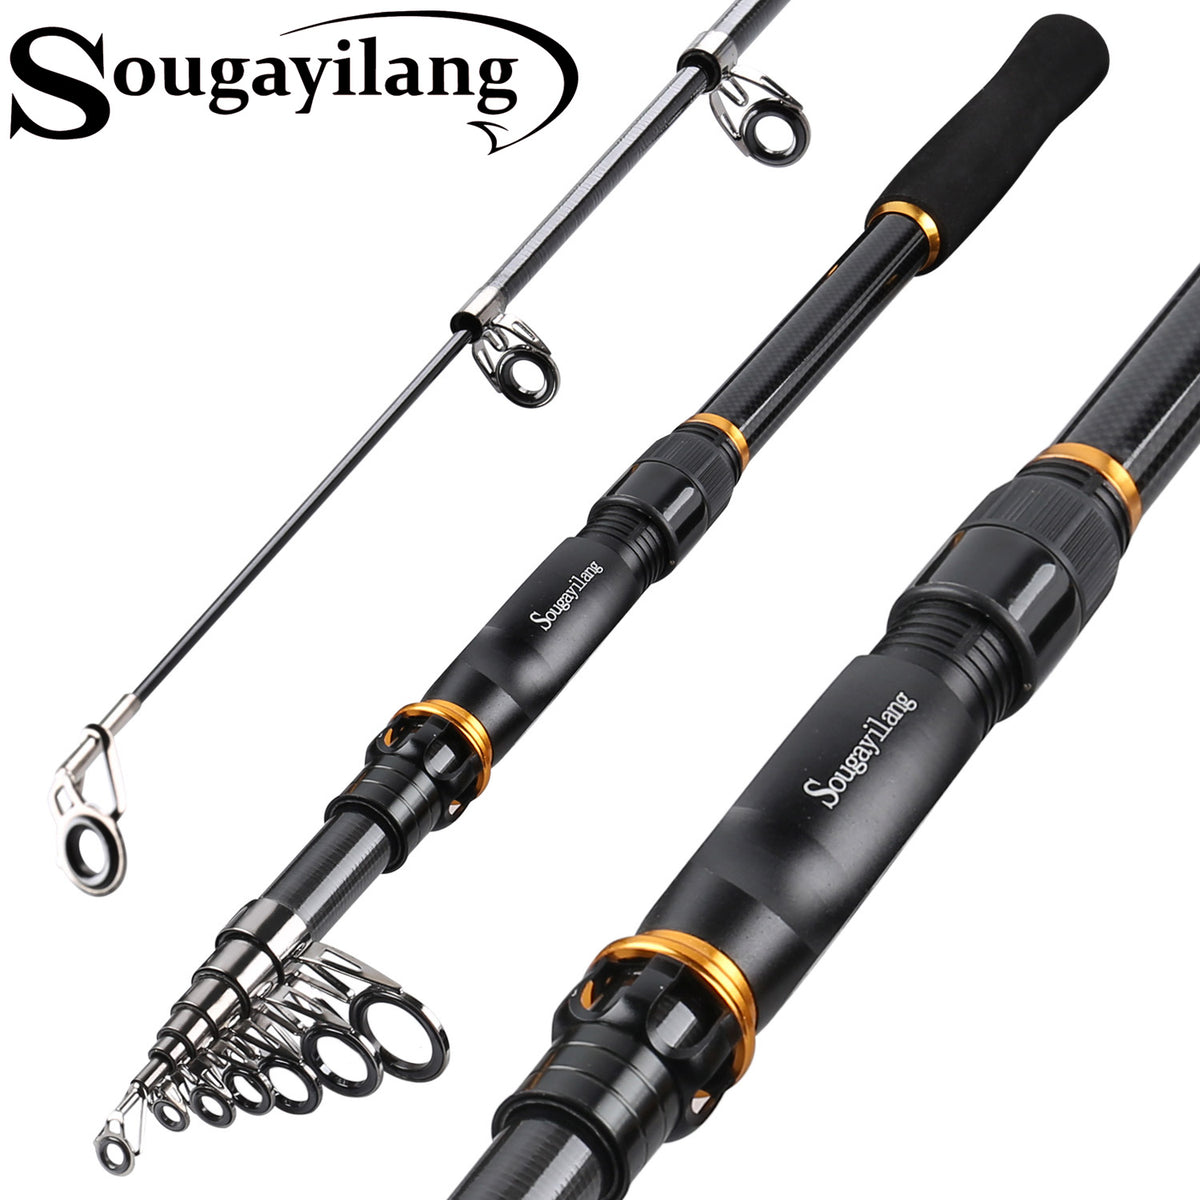 Sougayilang Telescopic Fishing Rod and Reel Combo with Fishing Line f